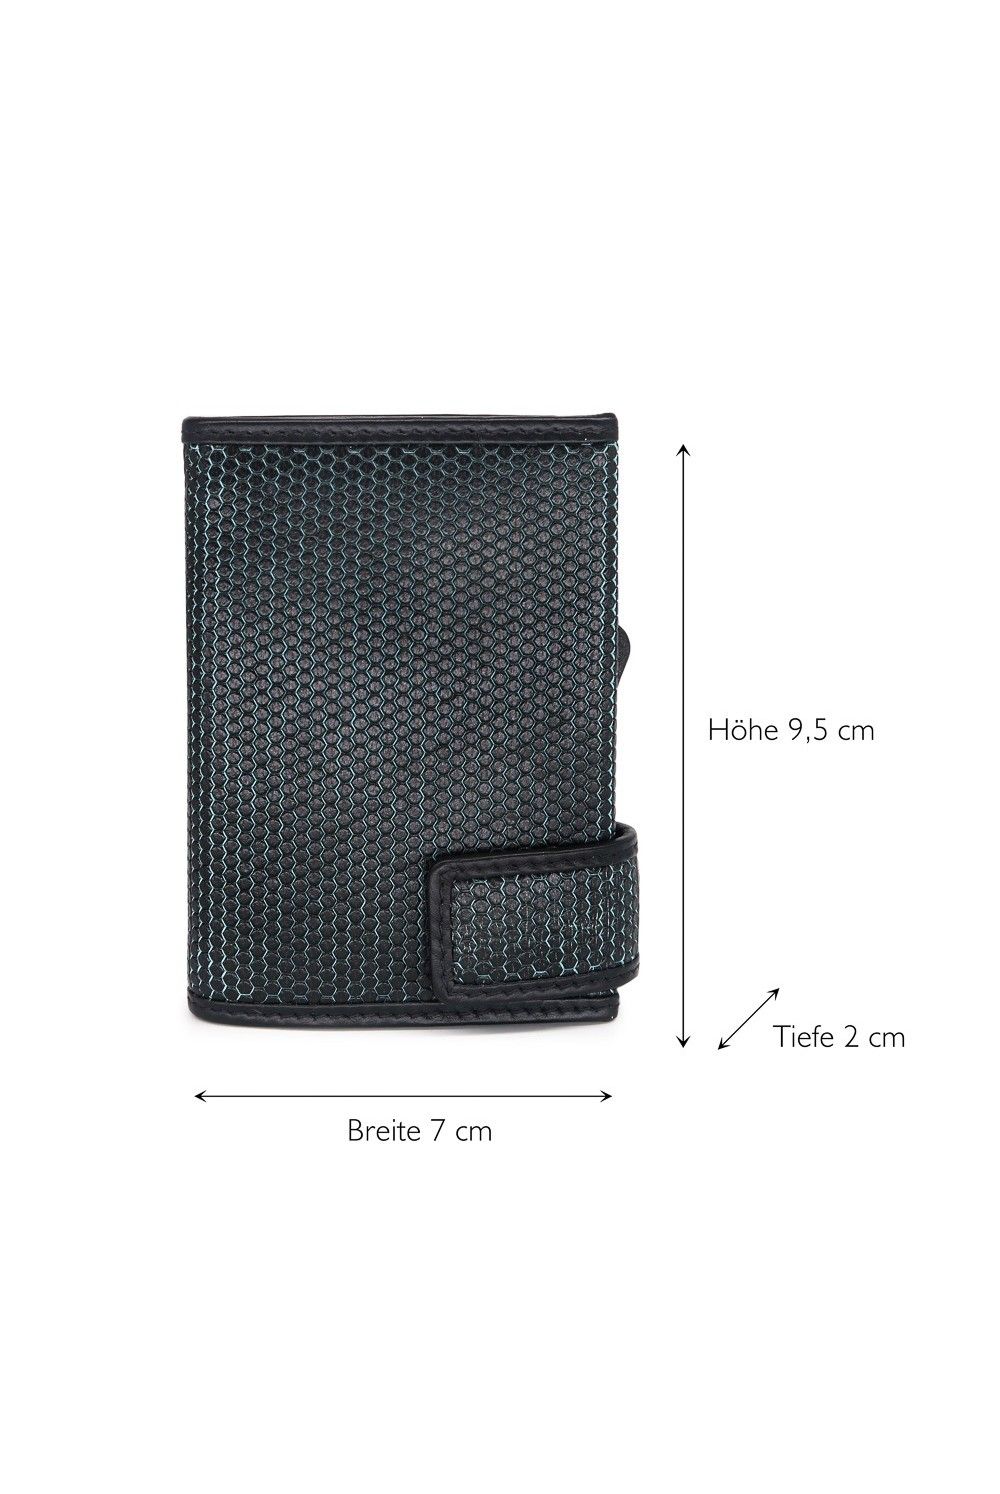 Porte-cartes SecWal RV Leather noir-turquoise